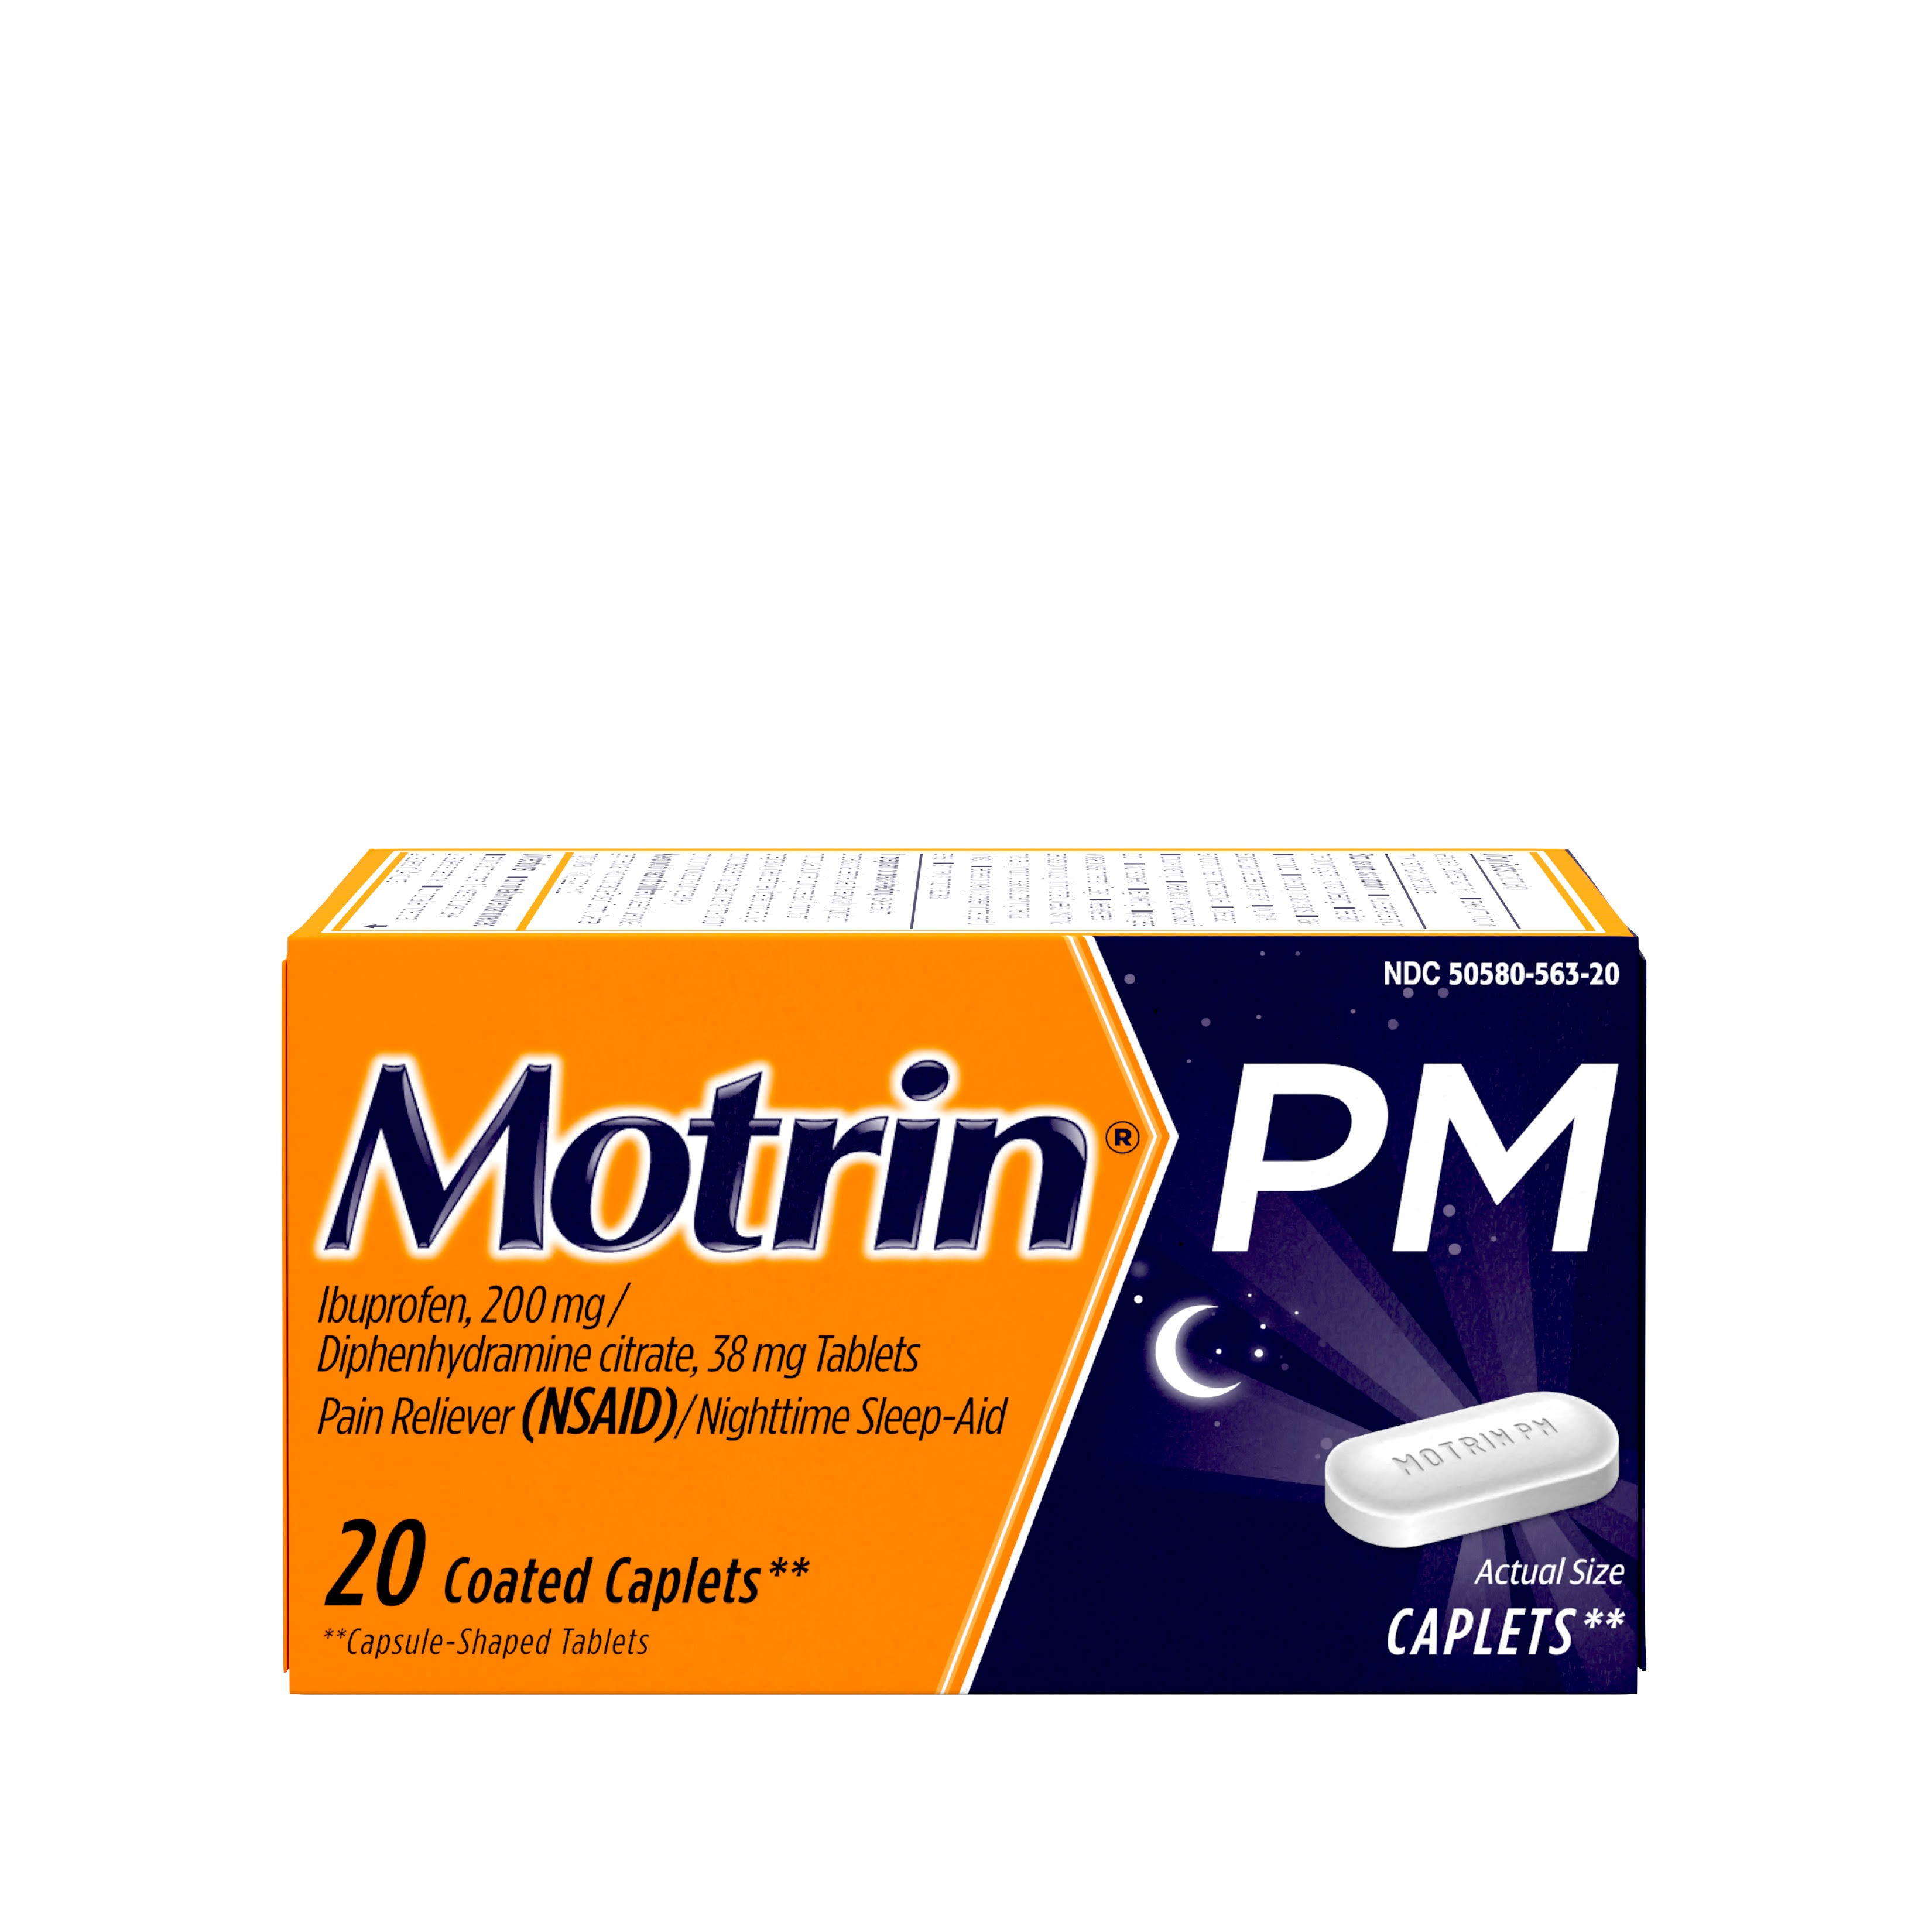 Motrin PM Pain Reliever Nighttime Sleep-Aid - 20 Coated Caplets